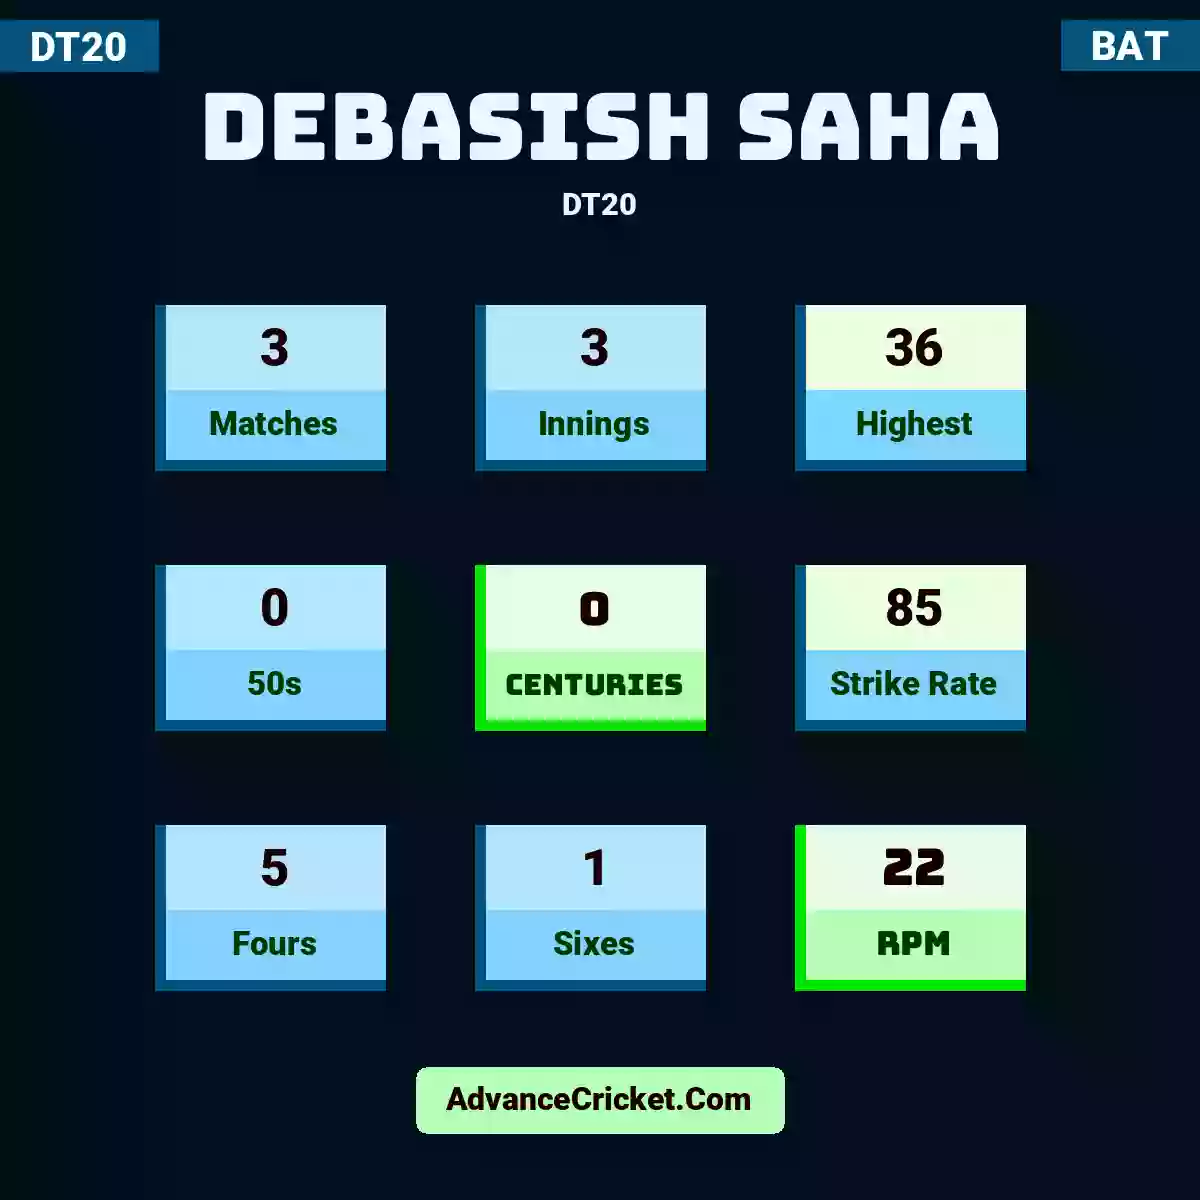 Debasish Saha DT20 , Debasish Saha played 3 matches, scored 36 runs as highest, 0 half-centuries, and 0 centuries, with a strike rate of 85. D.Saha hit 5 fours and 1 sixes, with an RPM of 22.